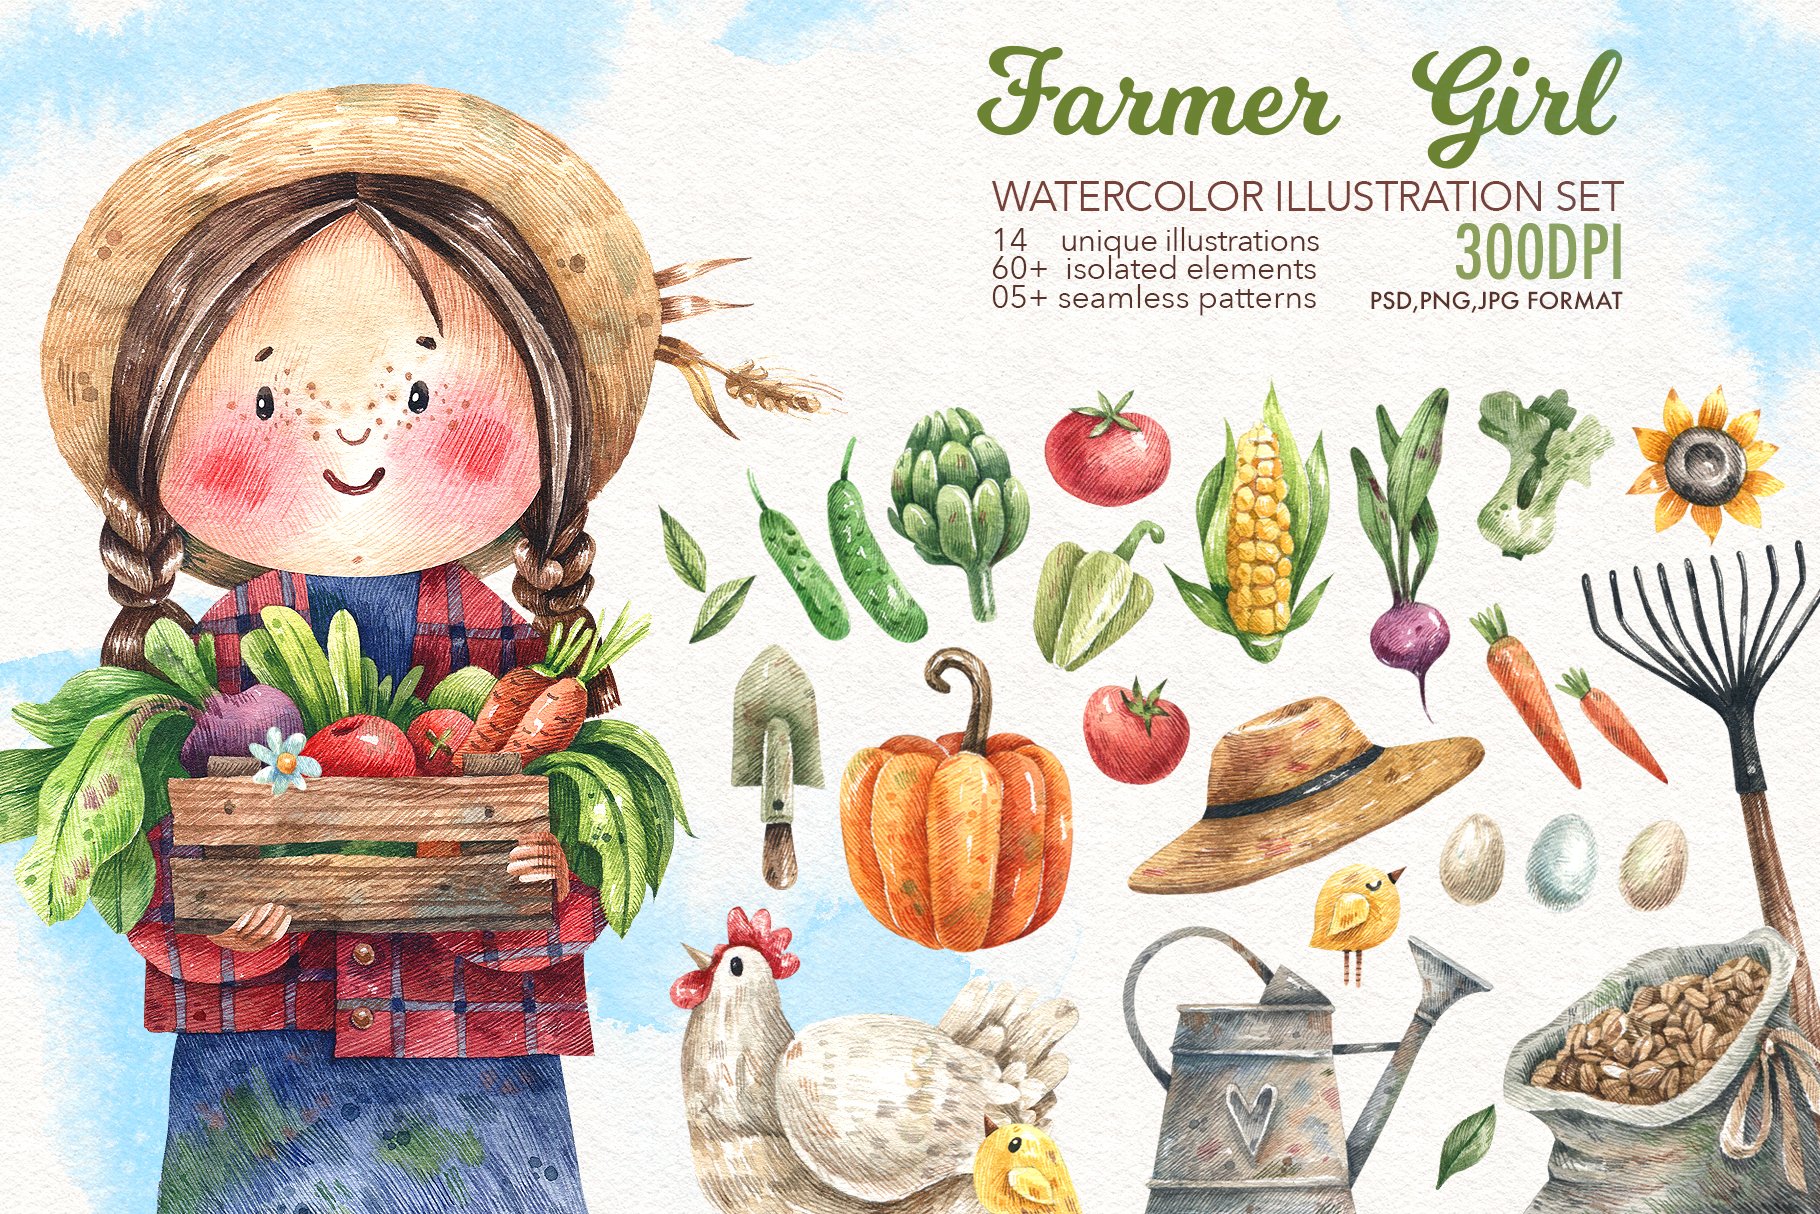 Farmer Girl watercolor illustration cover image.